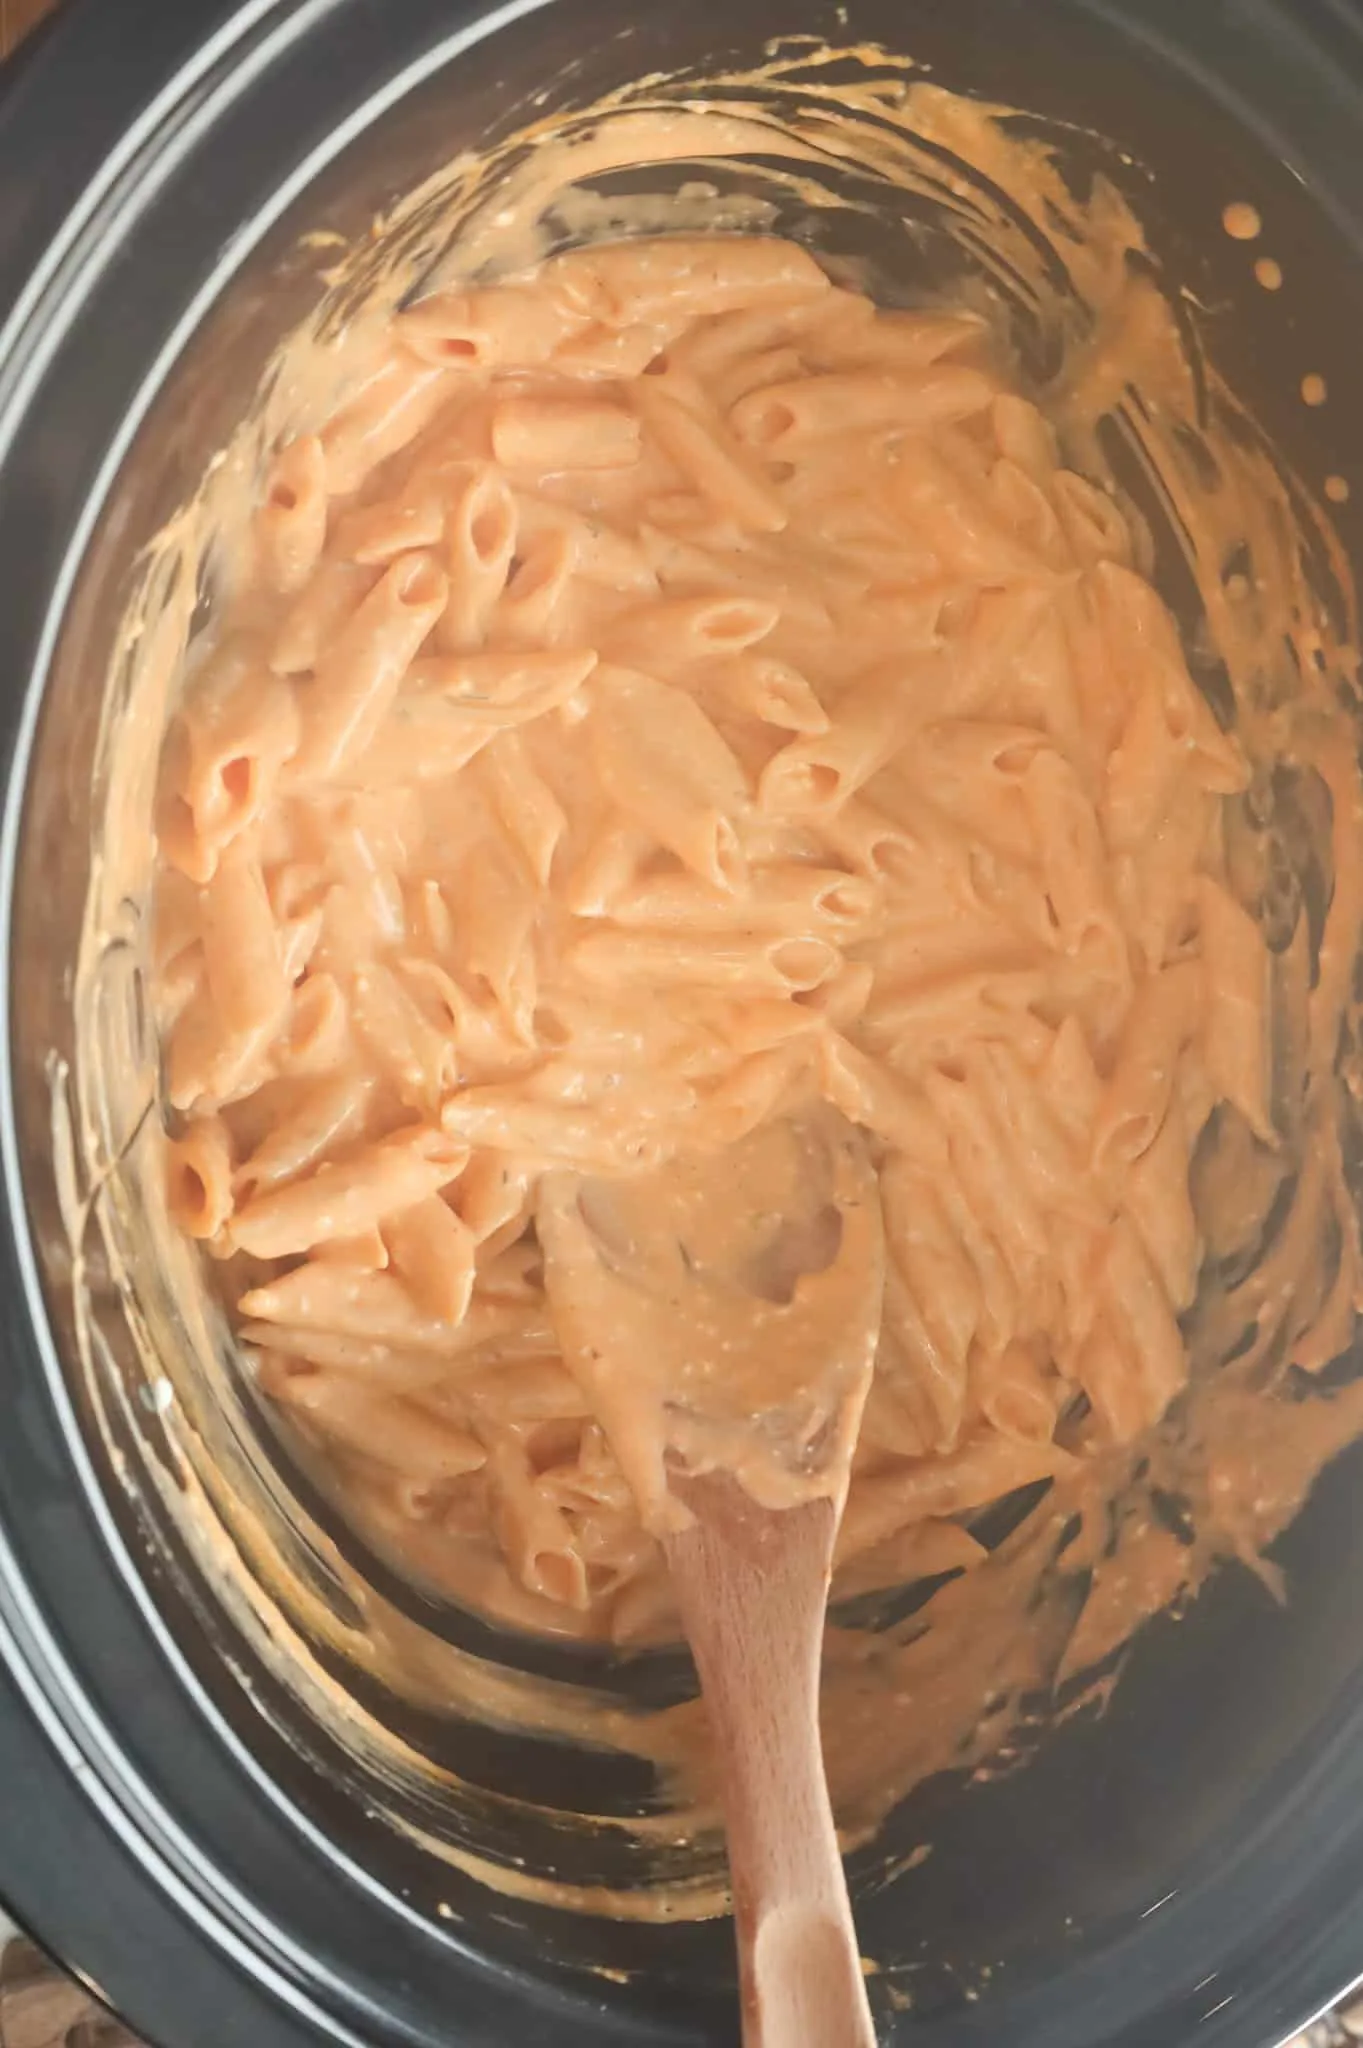 stirring penne noodles in Buffalo sauce in a crock pot